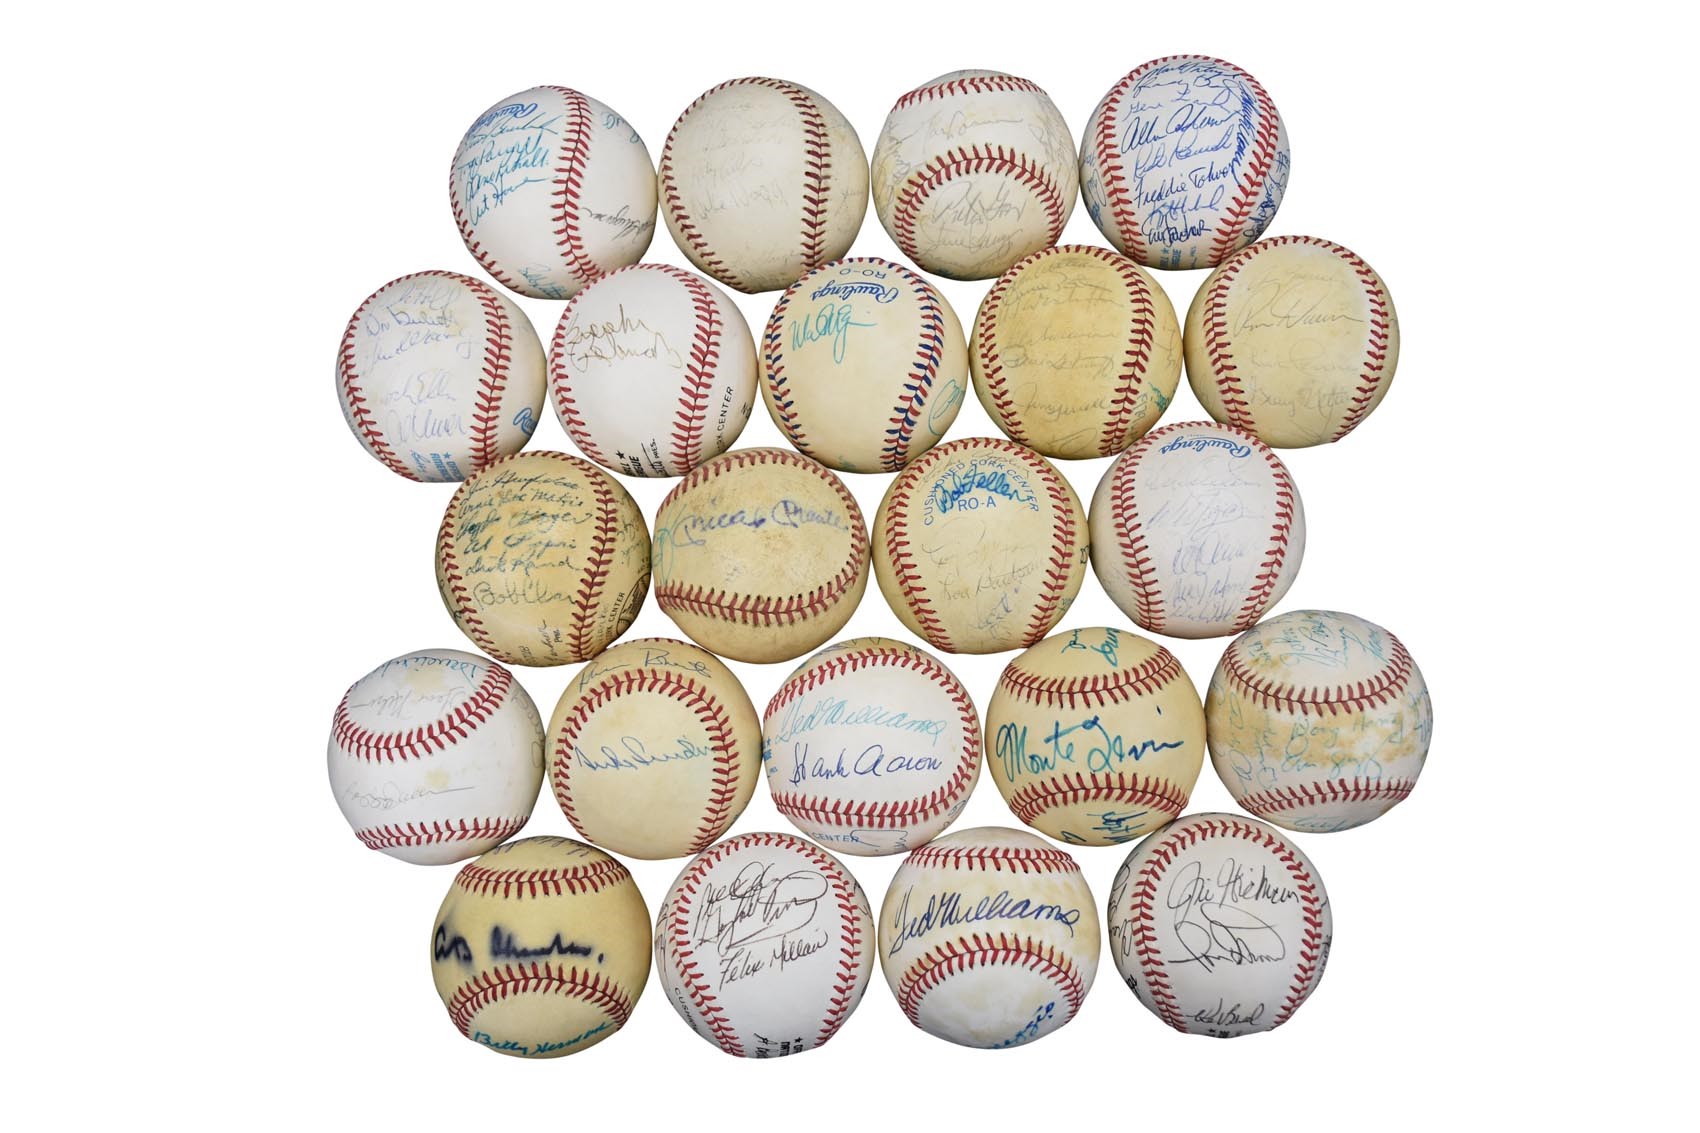 Baseball Autographs - Hall of Fame, Old Timers, Team & Multi-Signed Baseballs (35+)